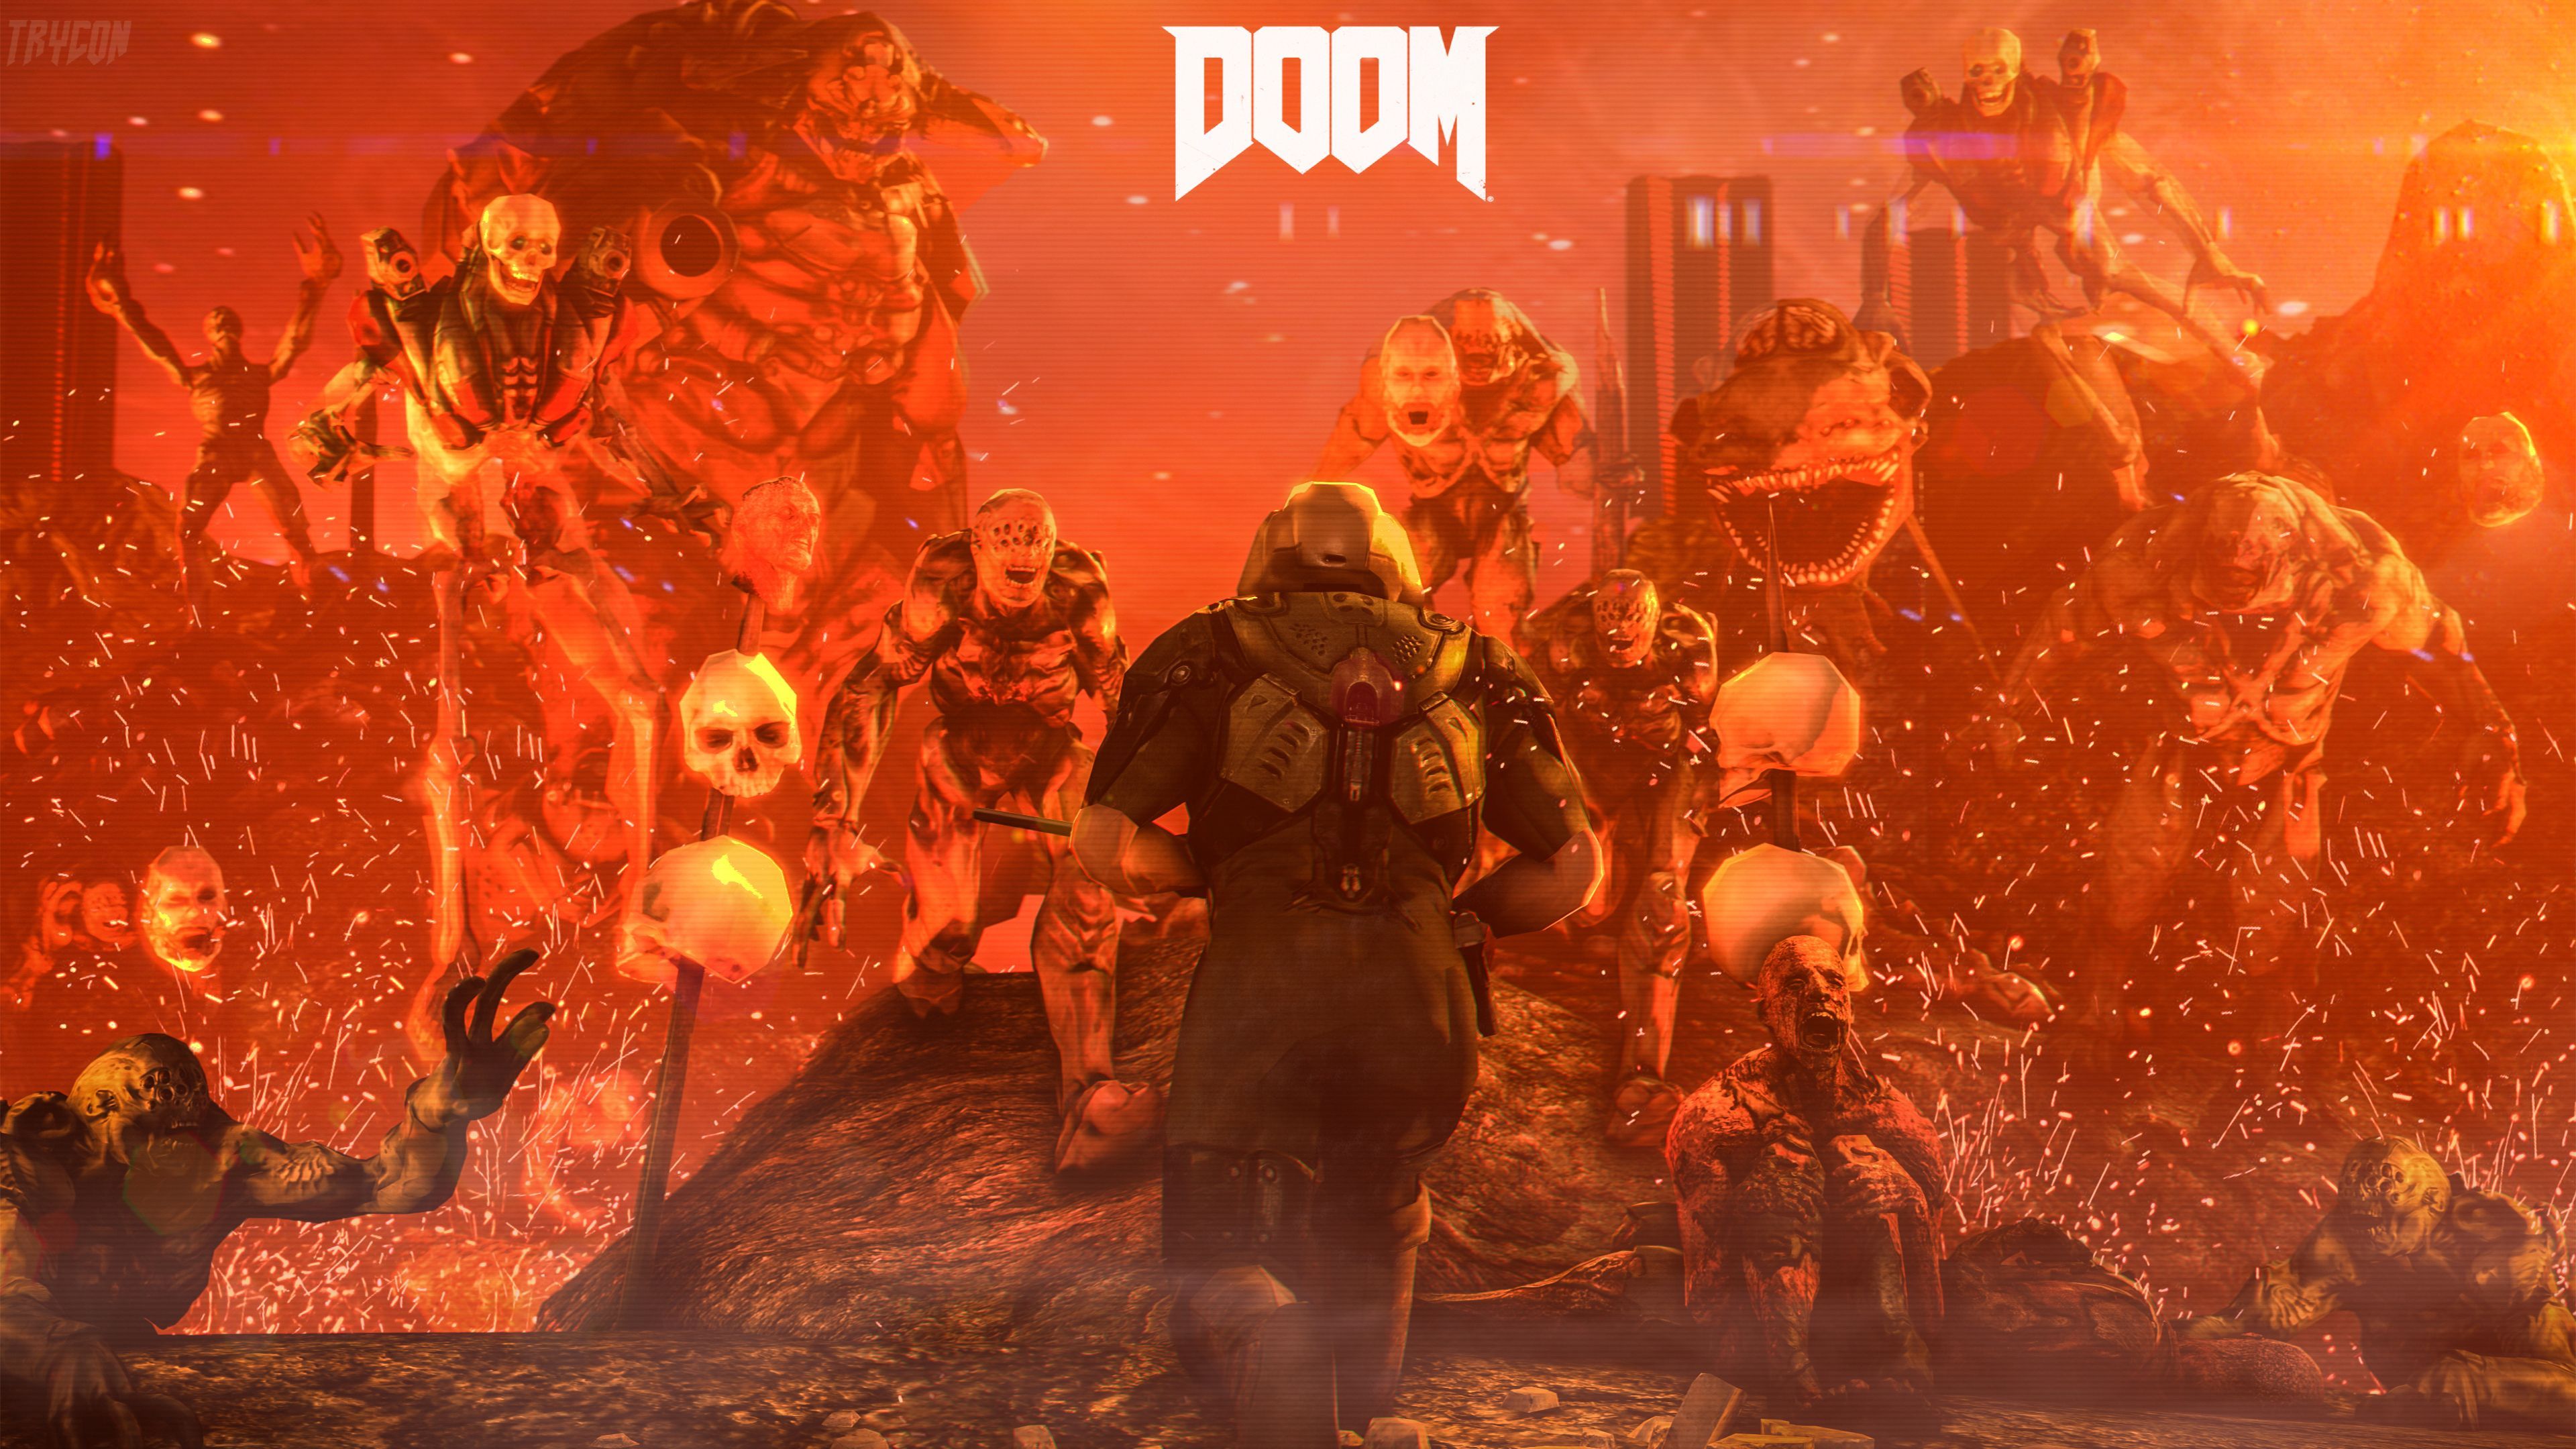 Doom 4 Digital Art 4k HD Wallpaper .com